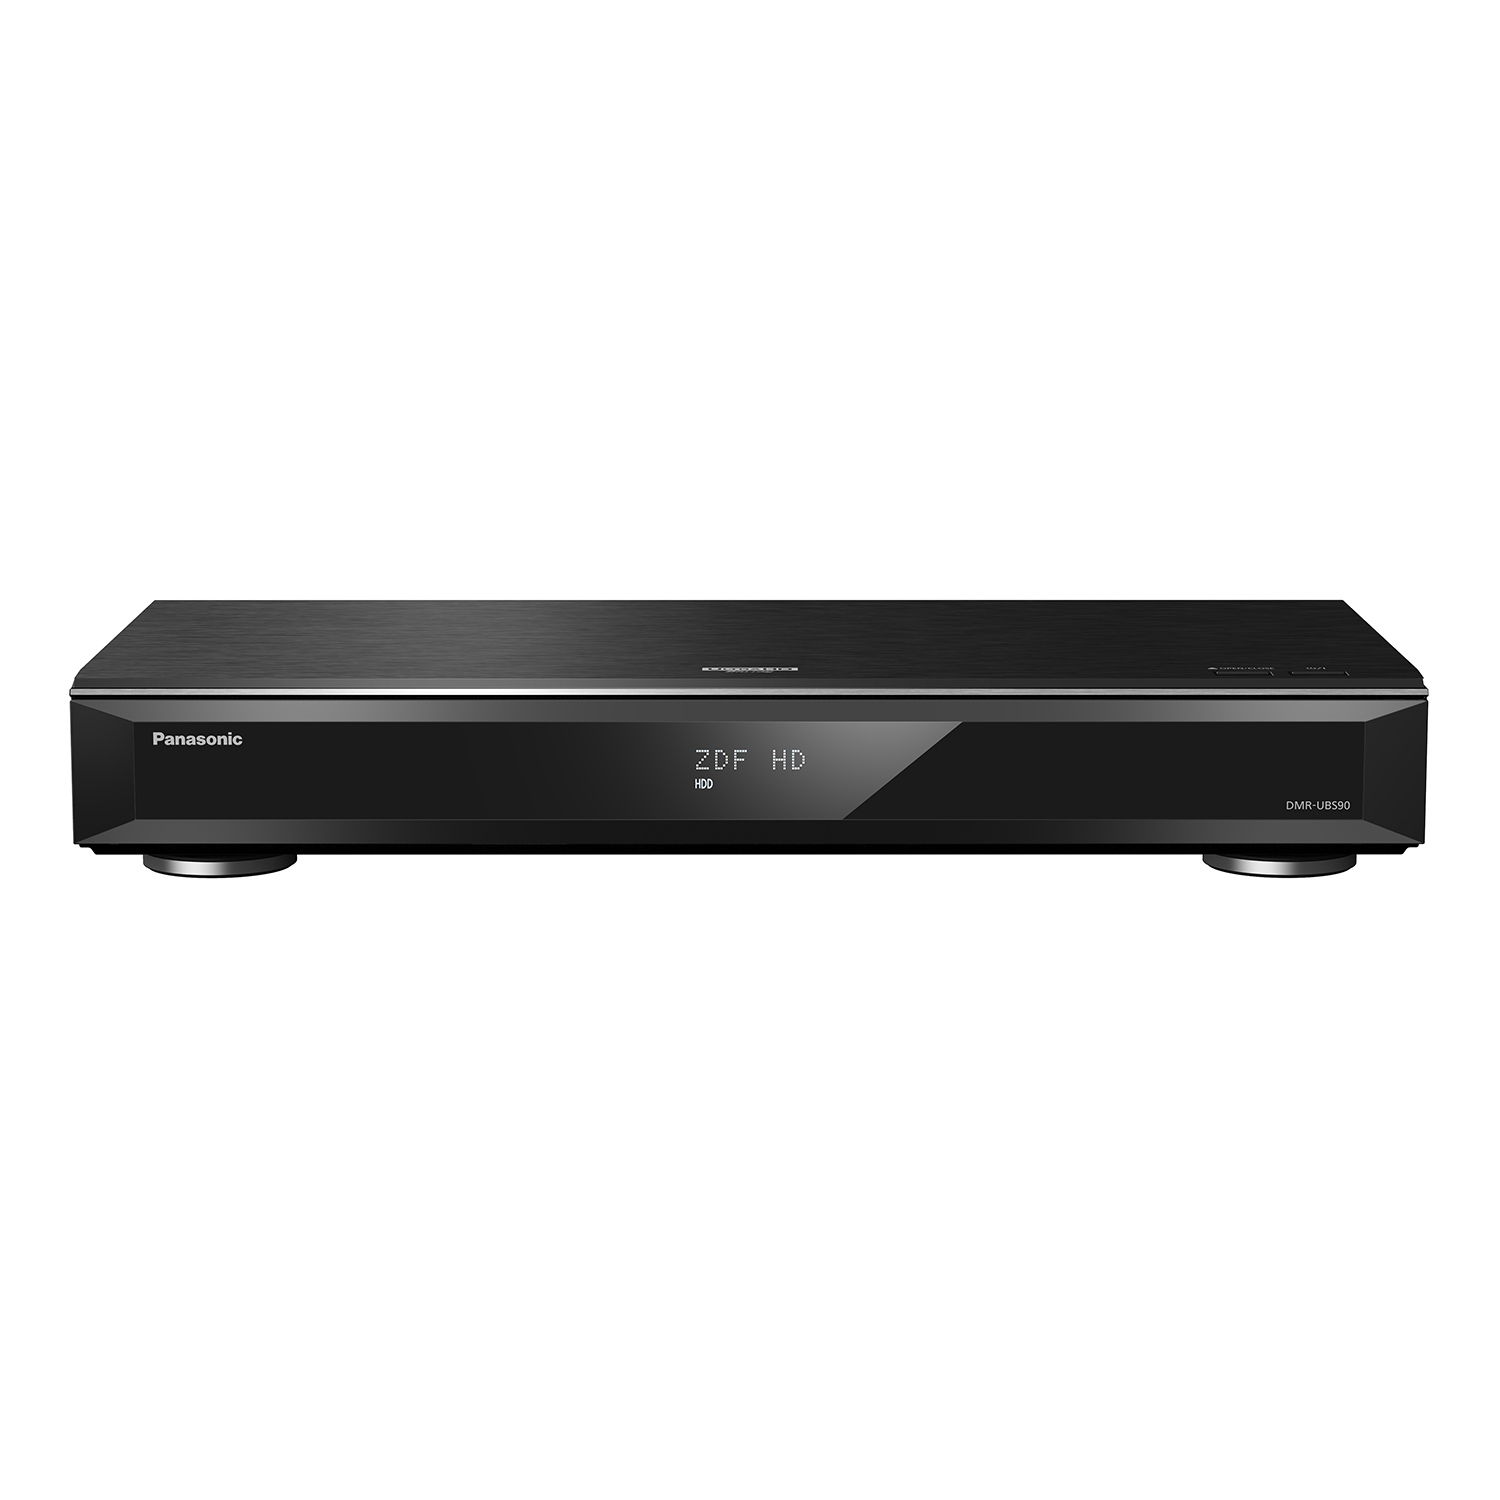 Panasonic DMR-UBS90EGK schwarz UHD Blu-ray Recorder Triple DVB-S Tuner